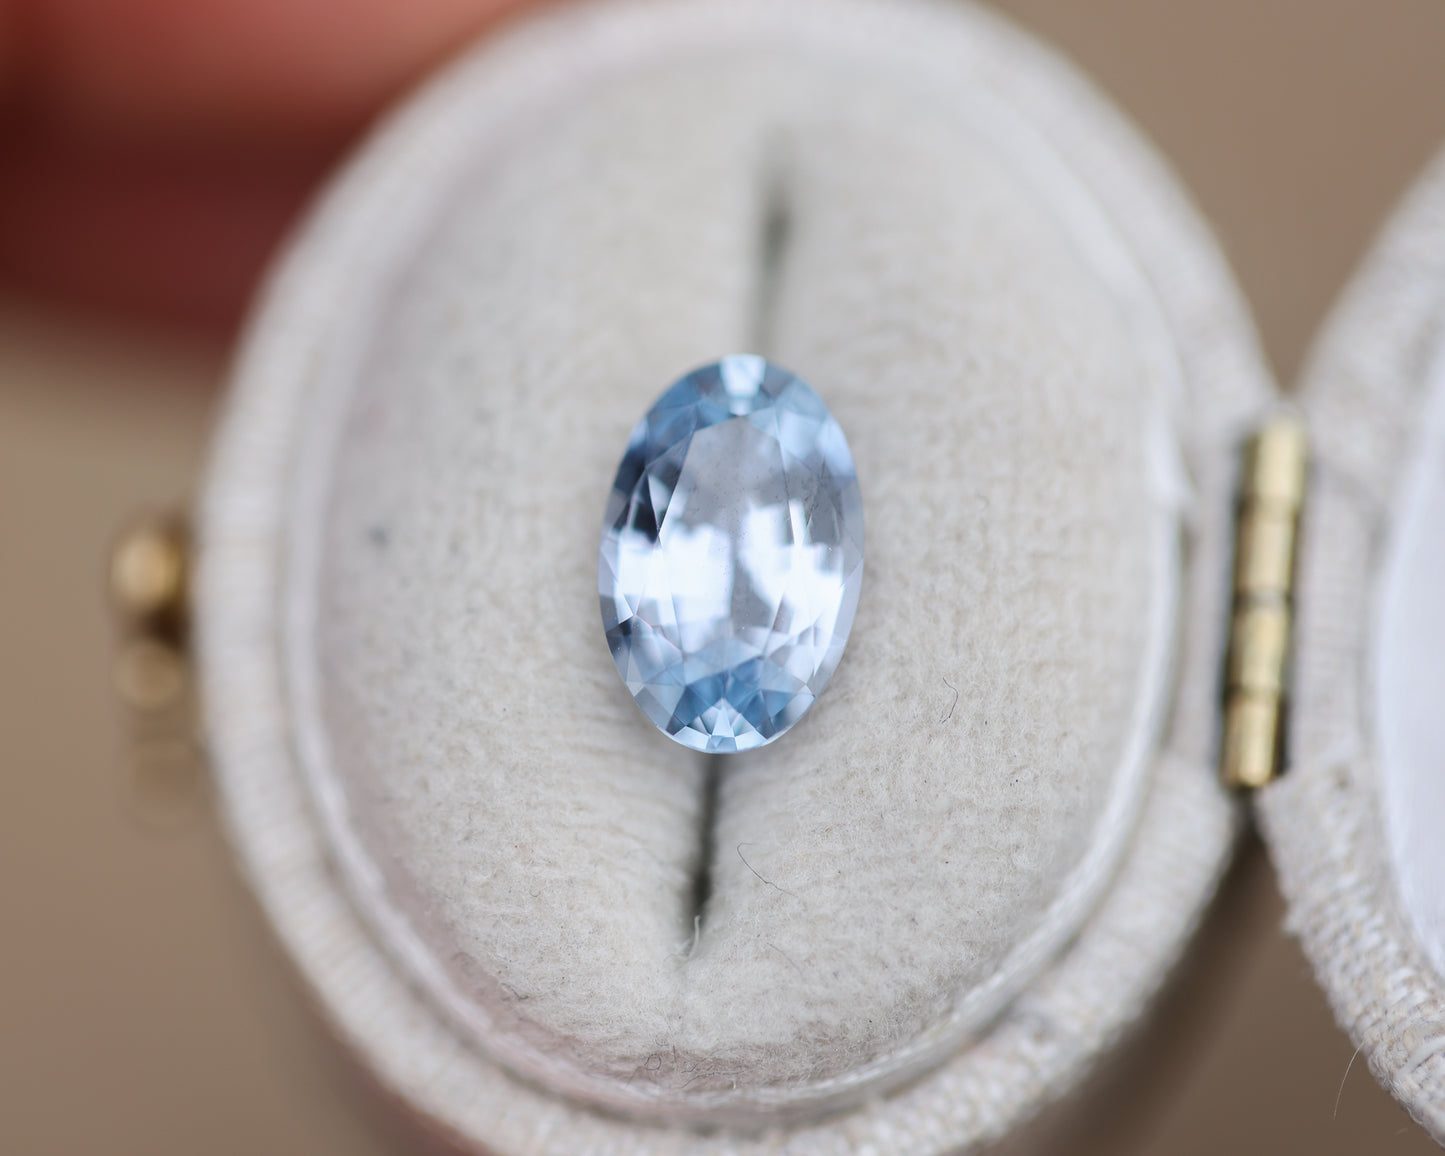 2.4ct oval light blue sapphire